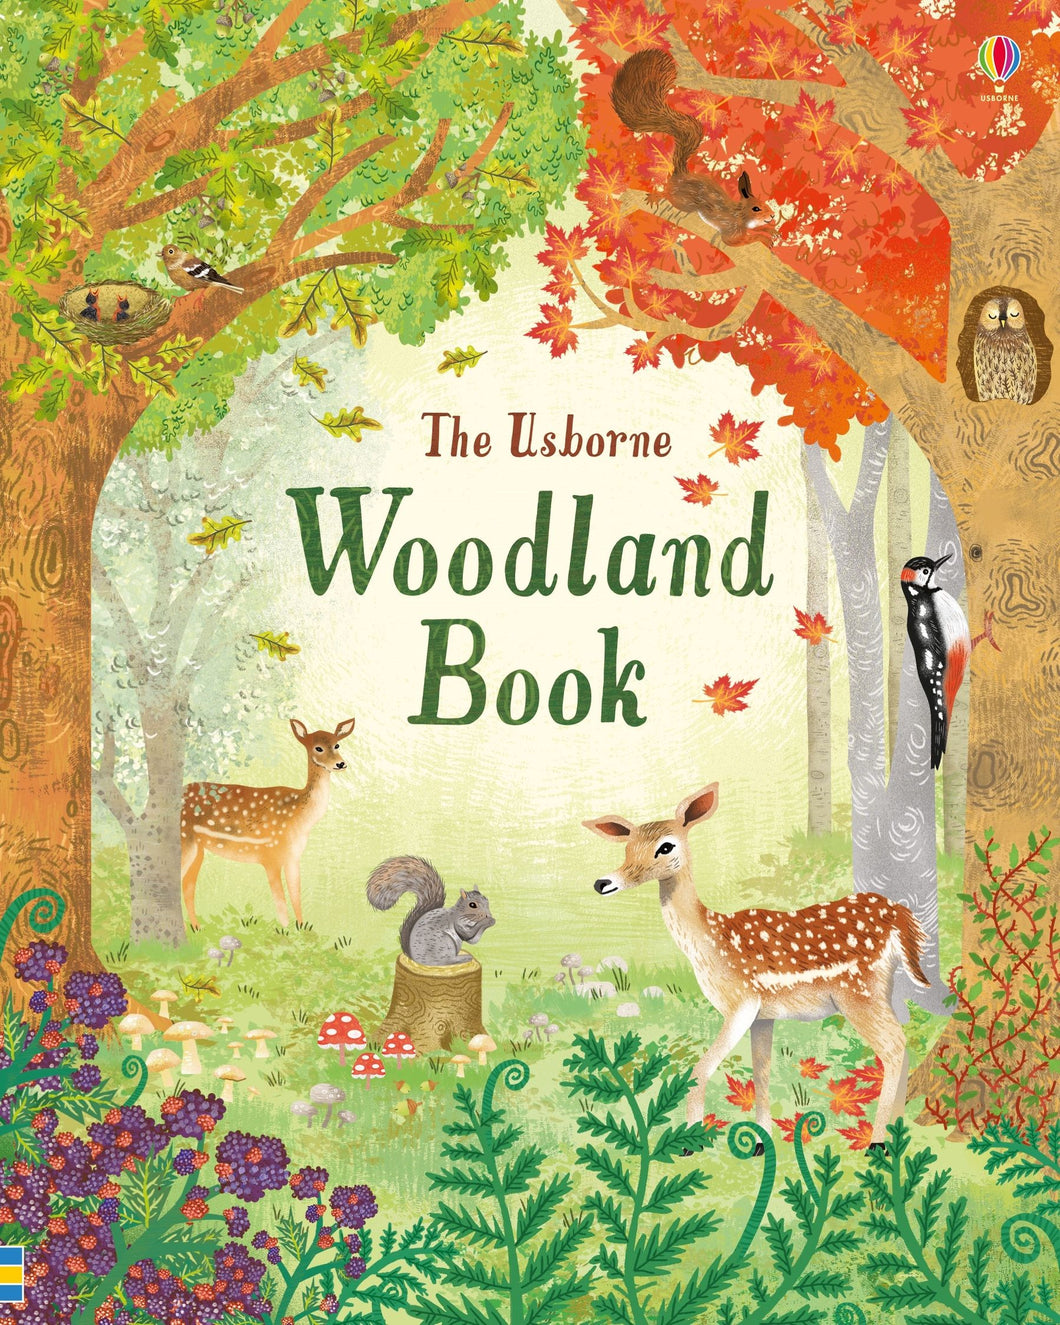 Woodland Book